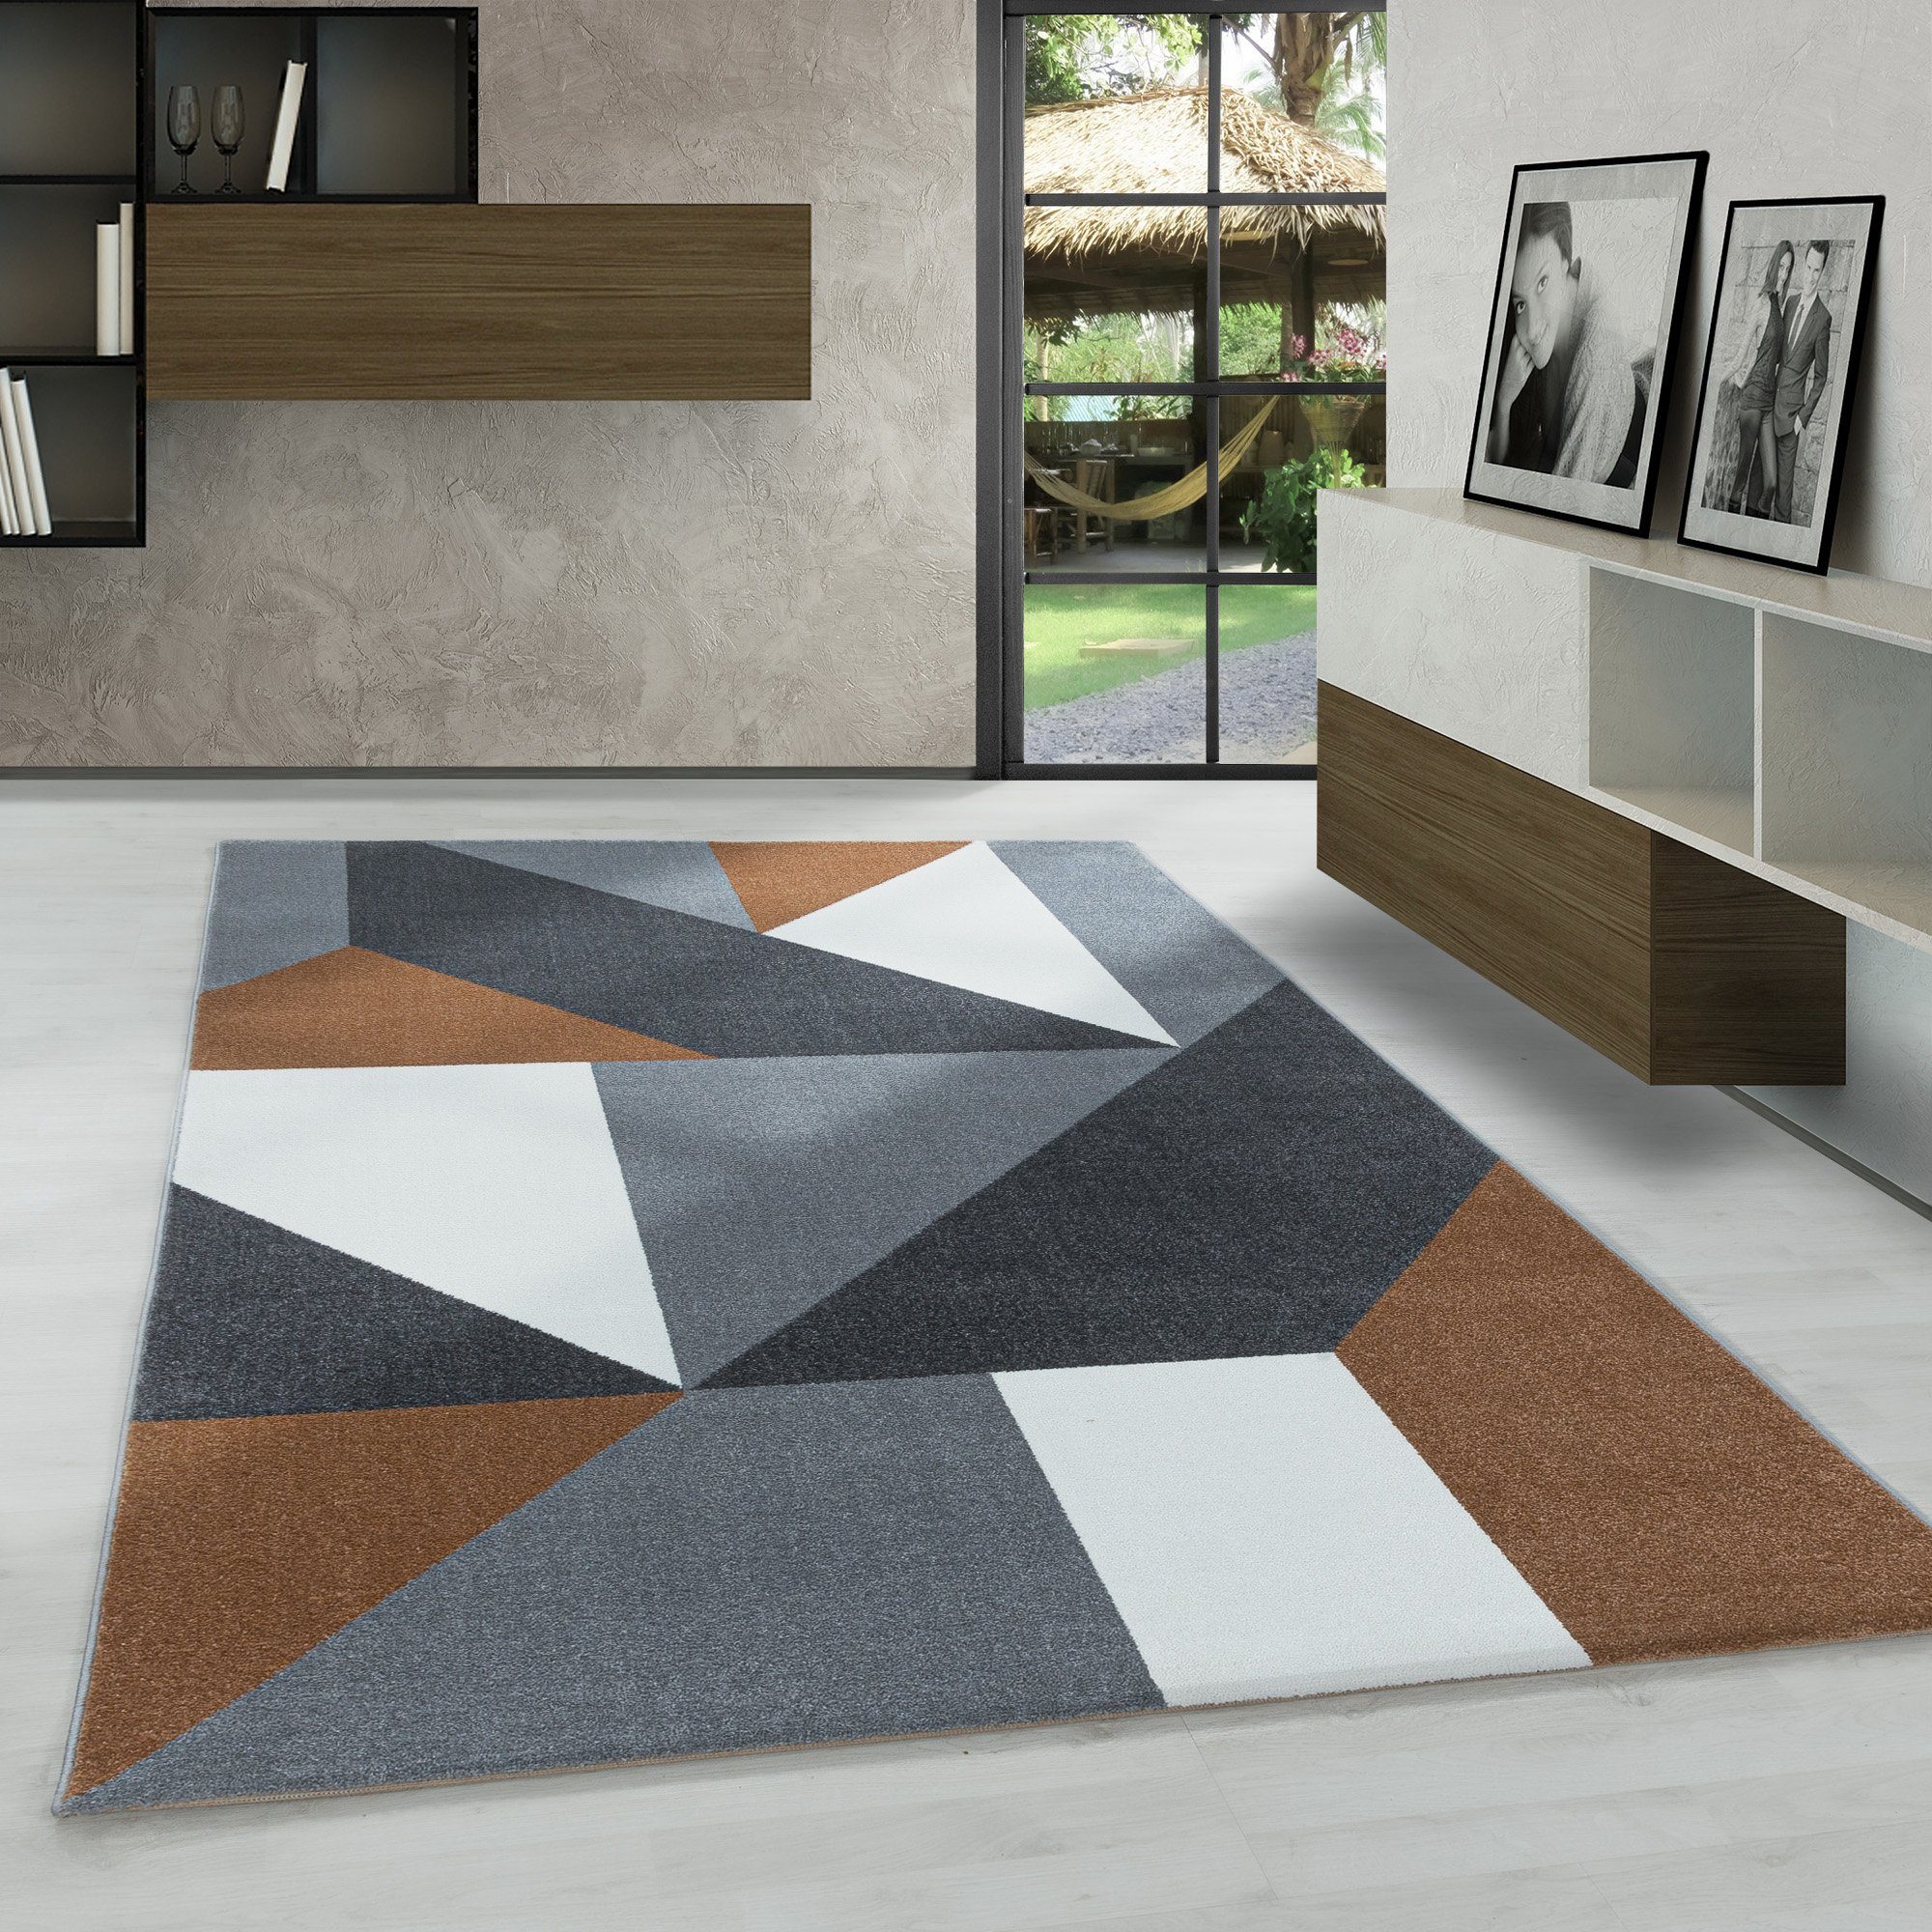 Frisé-Teppich Geometrisch Design, Carpetsale24, Läufer, Höhe: 8 mm, Kurzflor Teppich Wohnzimmer Geometrisch Design versch. größen